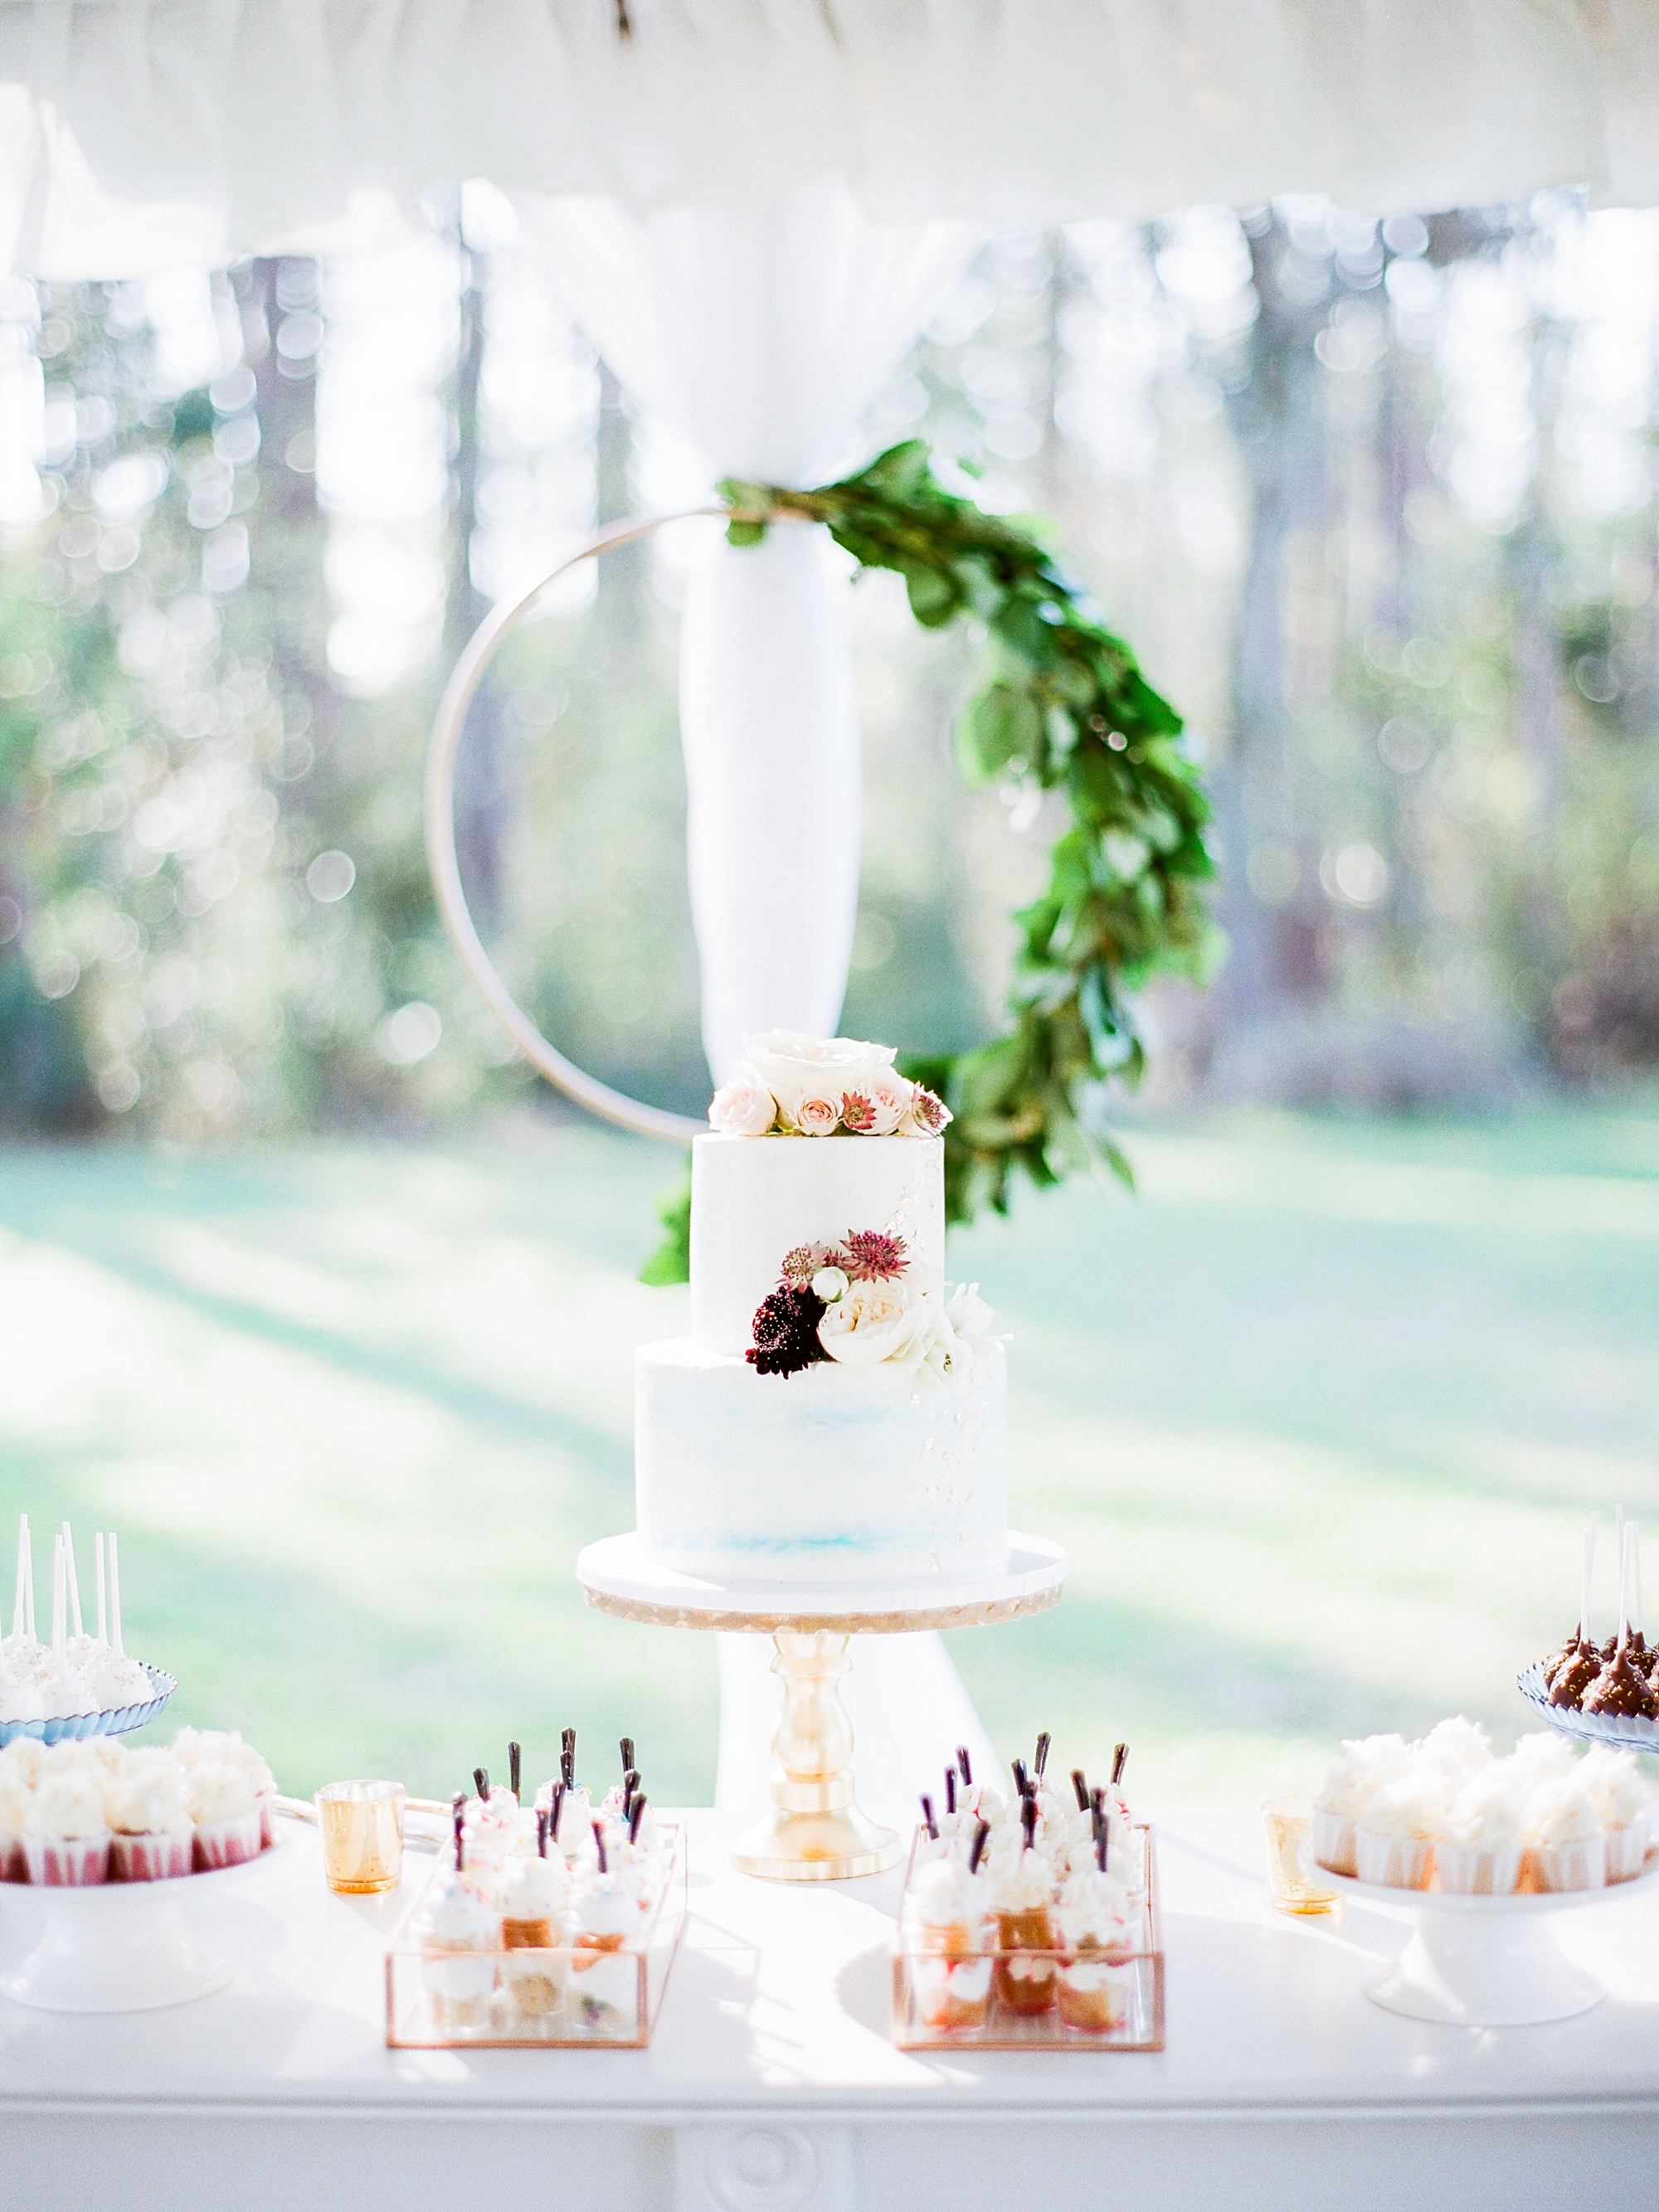 cake and dessert station at wedding